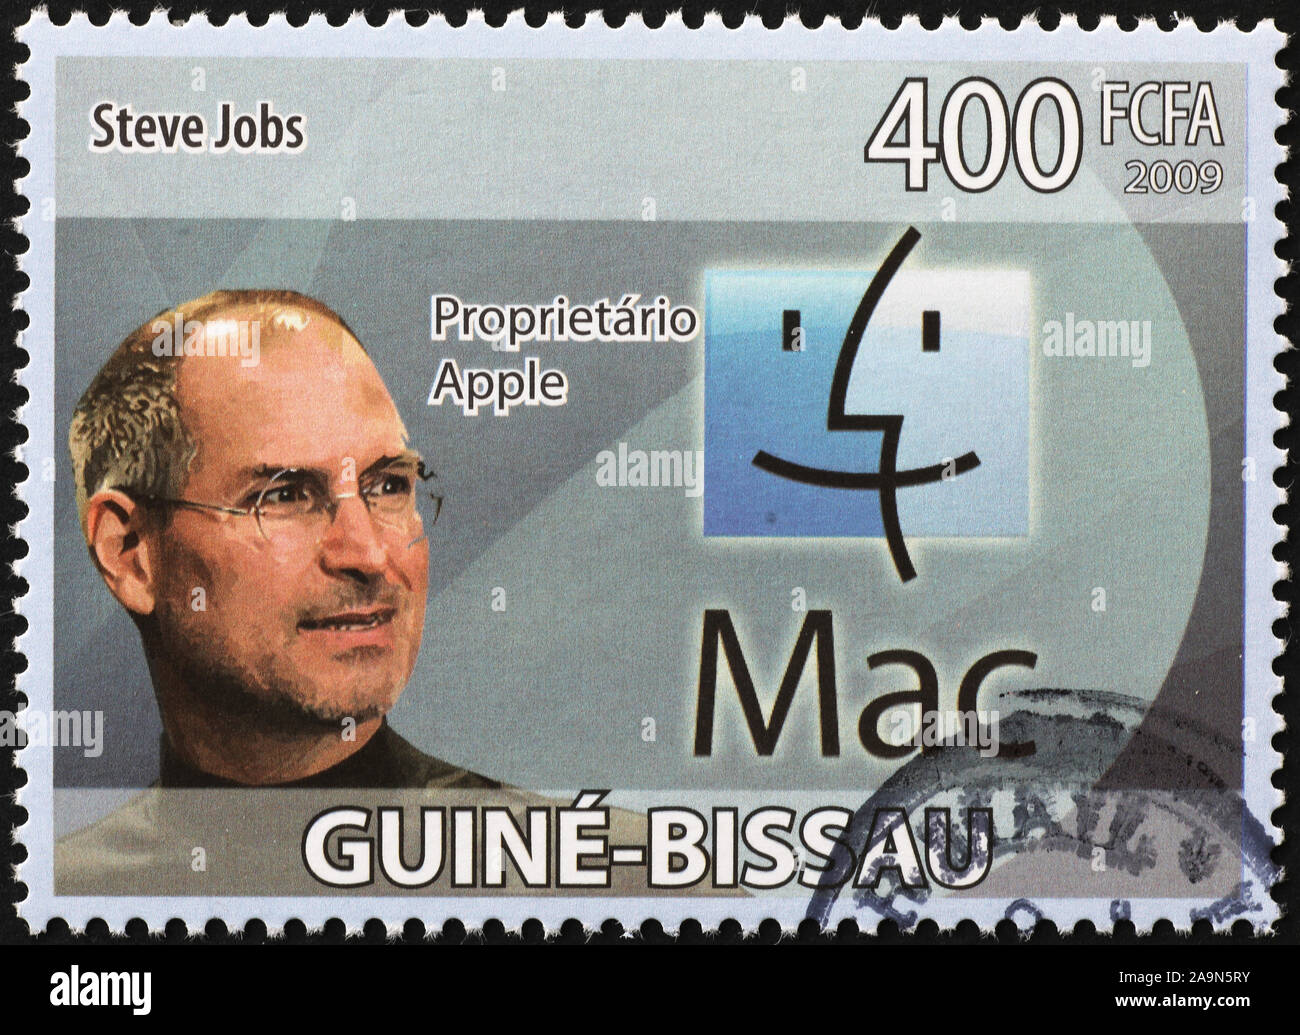 Steve Jobs portrait on postage stamp Stock Photo